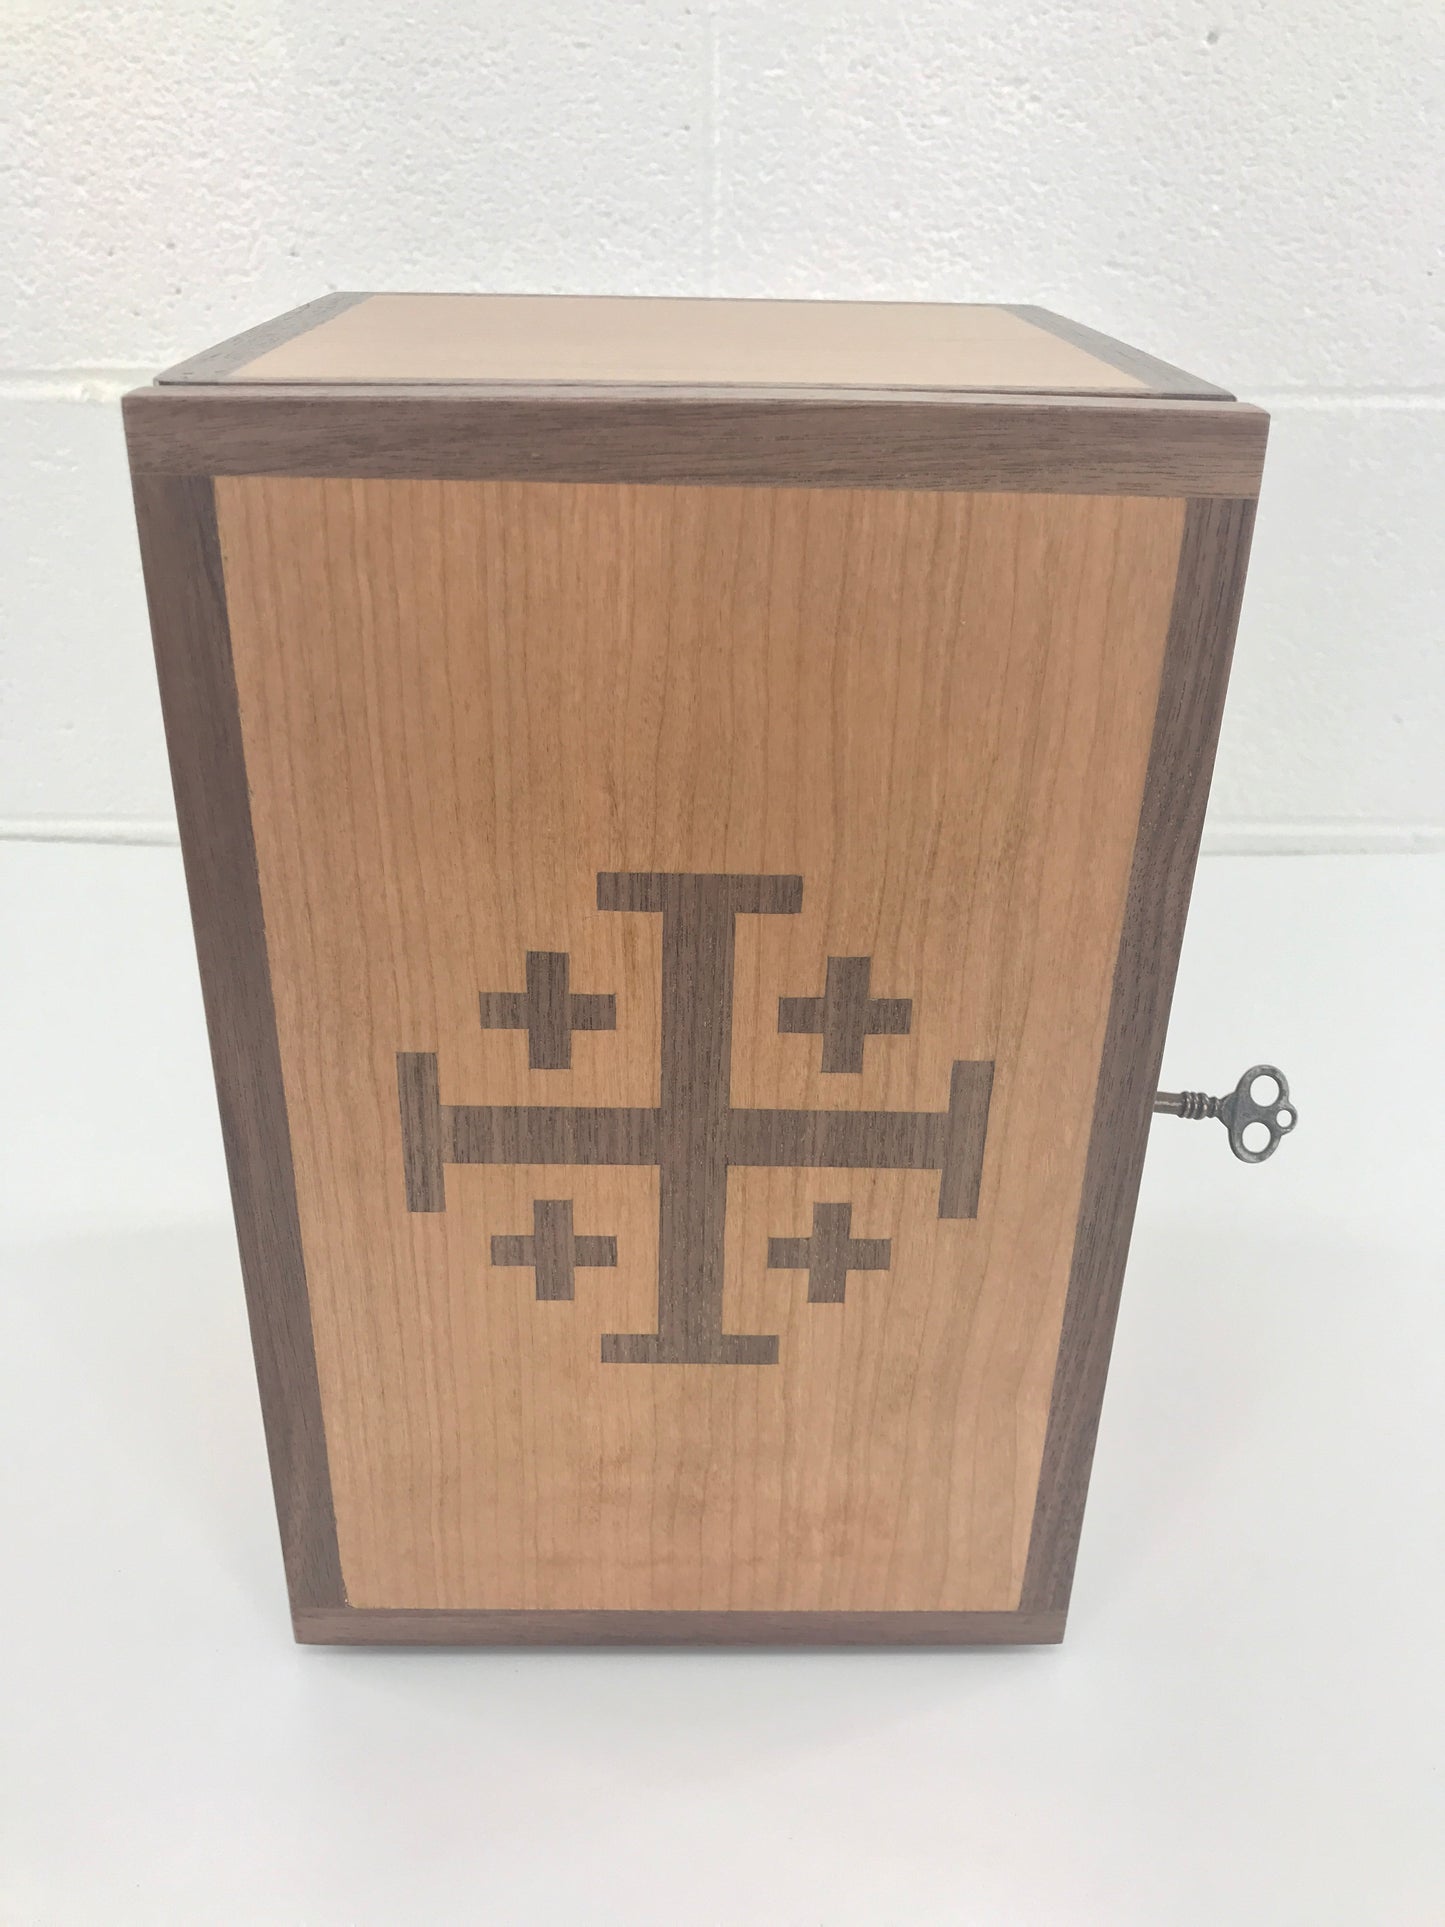 Wood Tabernacle with Jerusalem Cross - TreeToBox